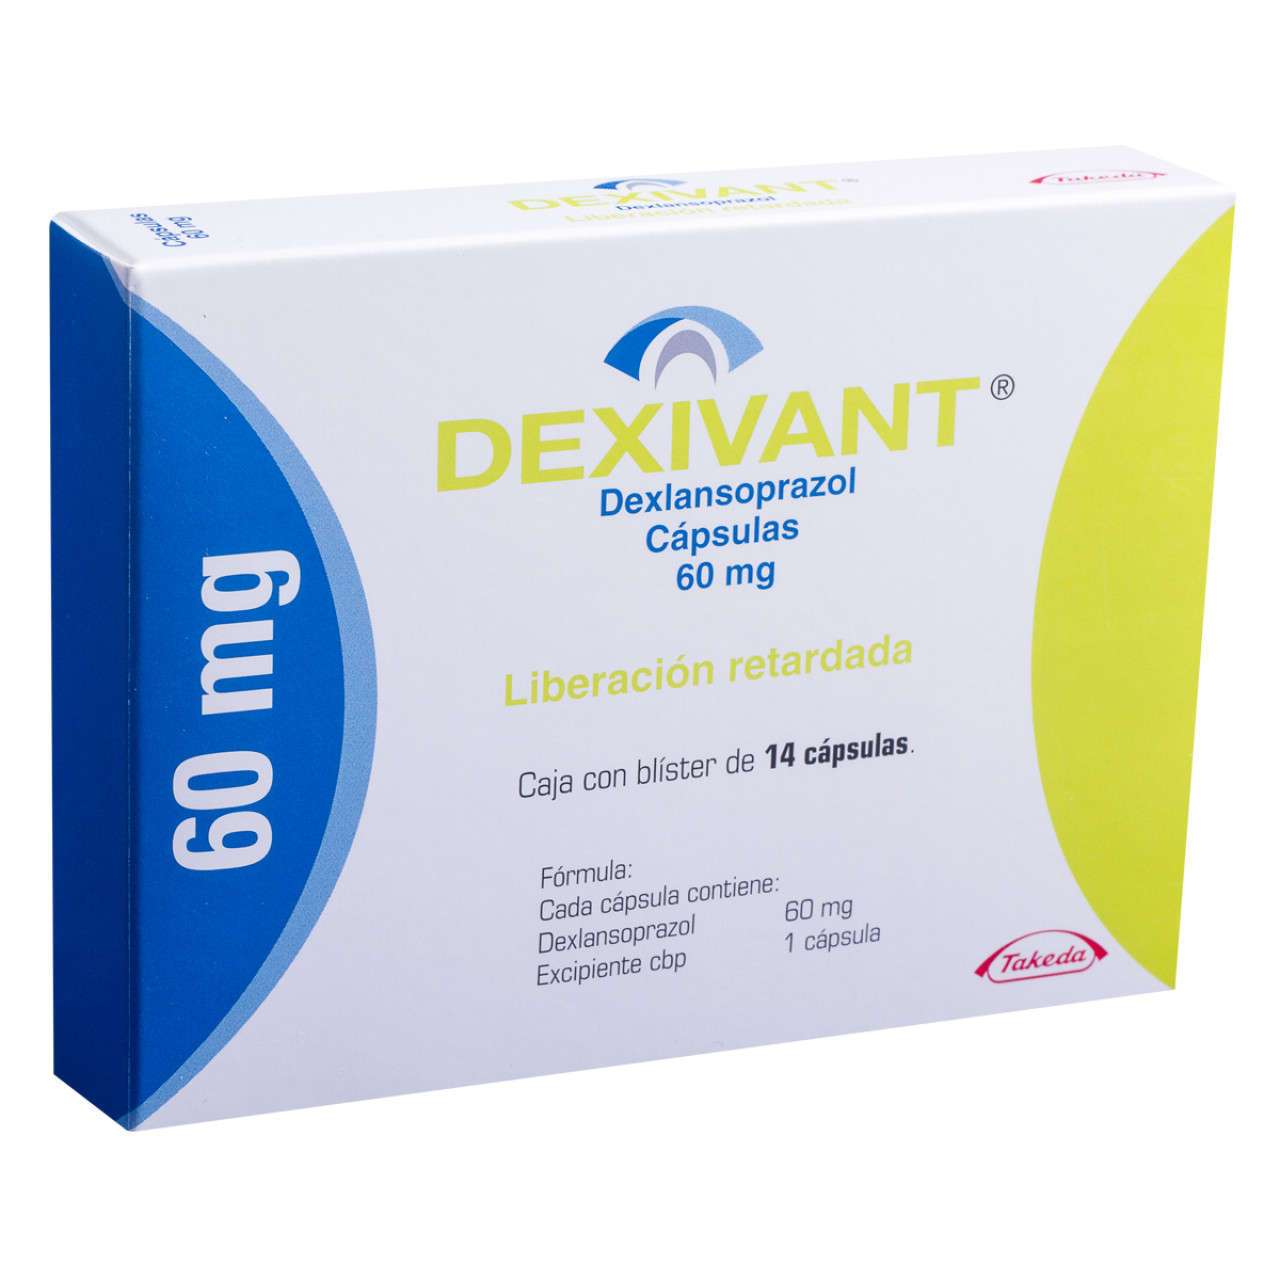 Dexivant 60 mg precio farmacia guadalajara